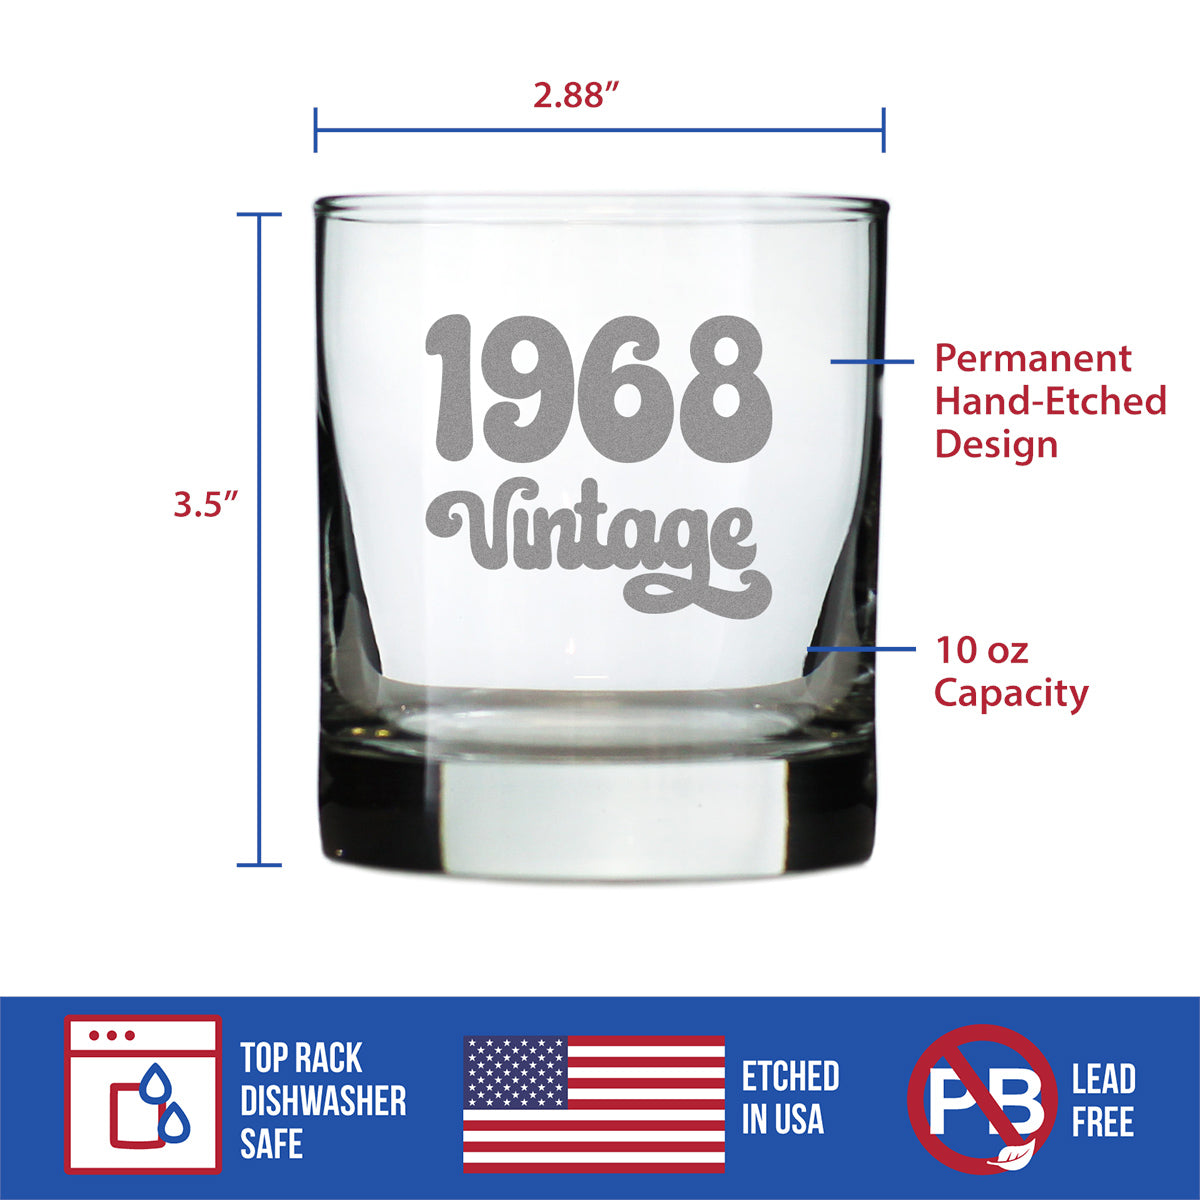 Vintage 1968 - Fun 55th Birthday Whiskey Rocks Glass Gifts for Men &amp; Women Turning 55 - Retro Whisky Drinking Tumbler